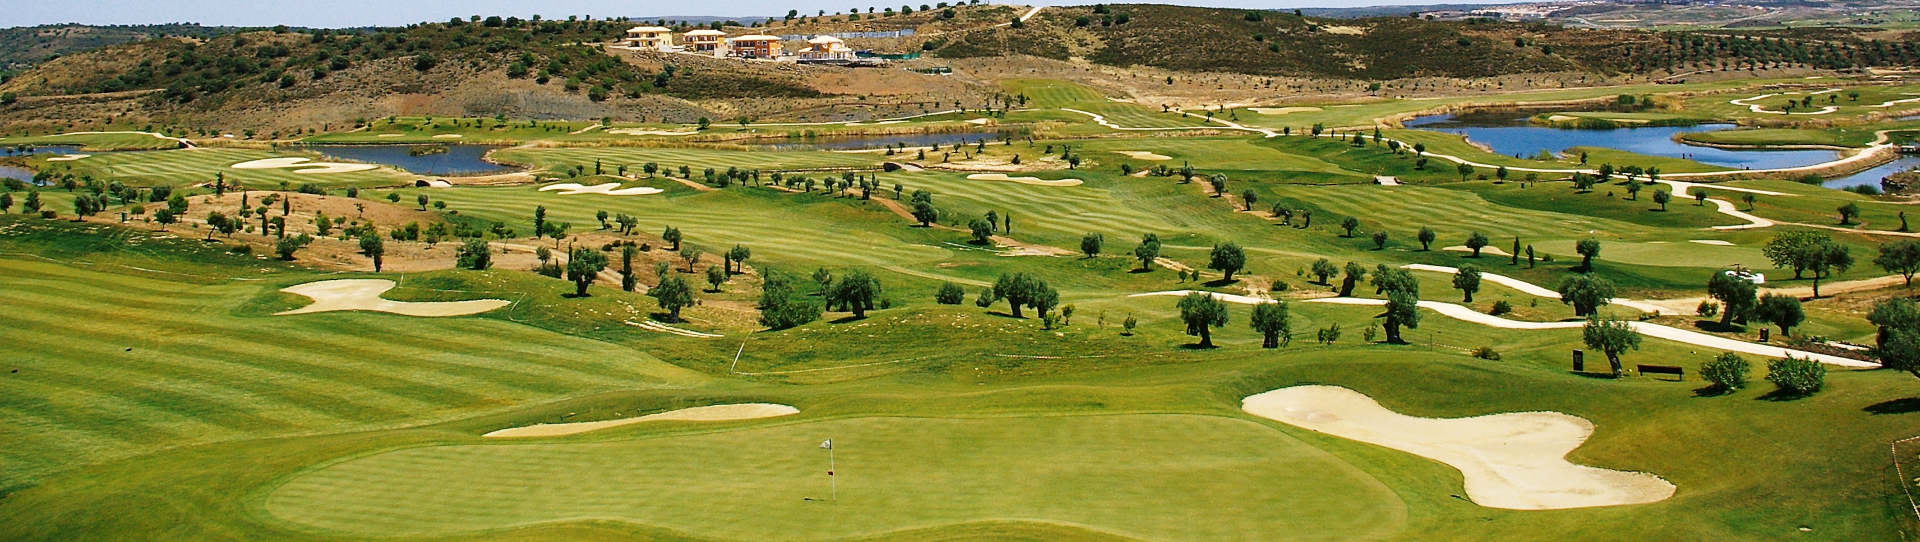 Portugal golf courses - Quinta do Vale Golf Course - Photo 2